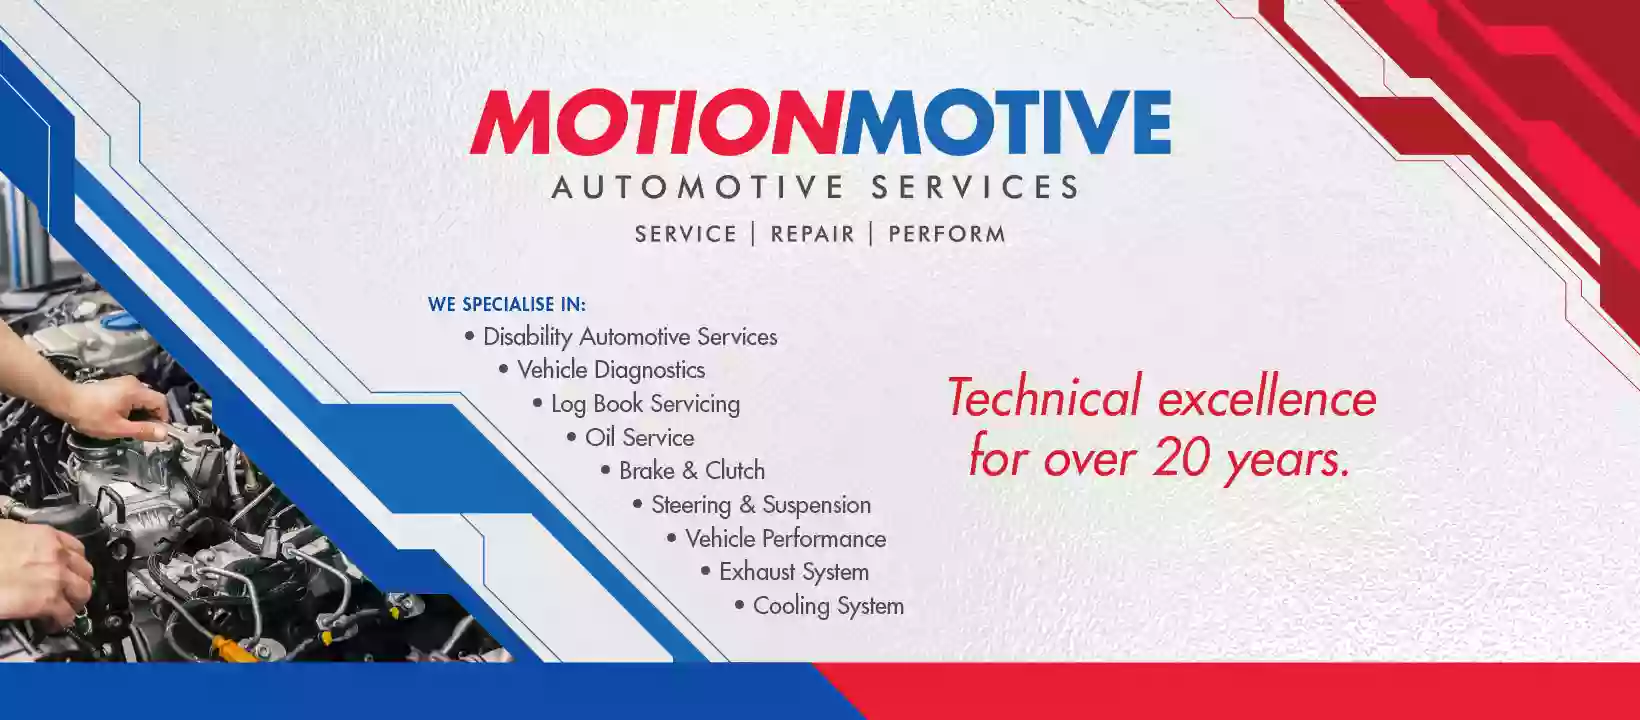 Motionmotive Automotive Services